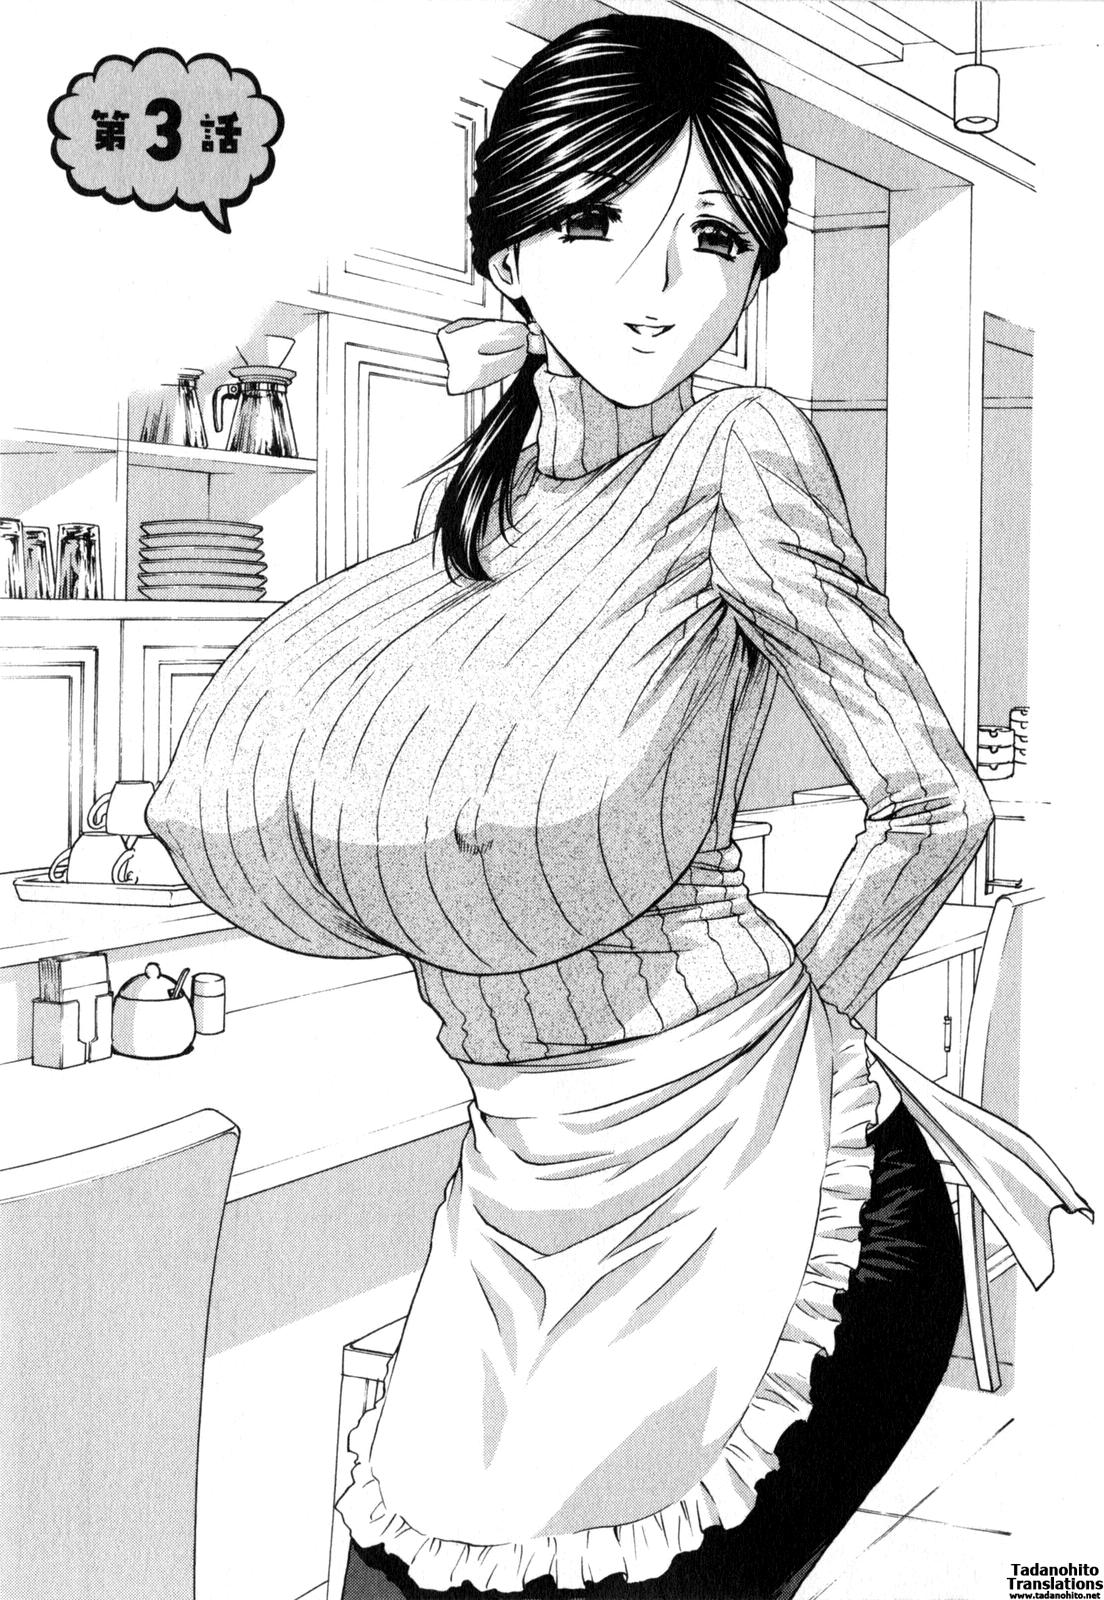 [Hidemaru] Life with Married Women Just Like a Manga 2 - Ch. 1-7 [English] {Tadanohito} 46